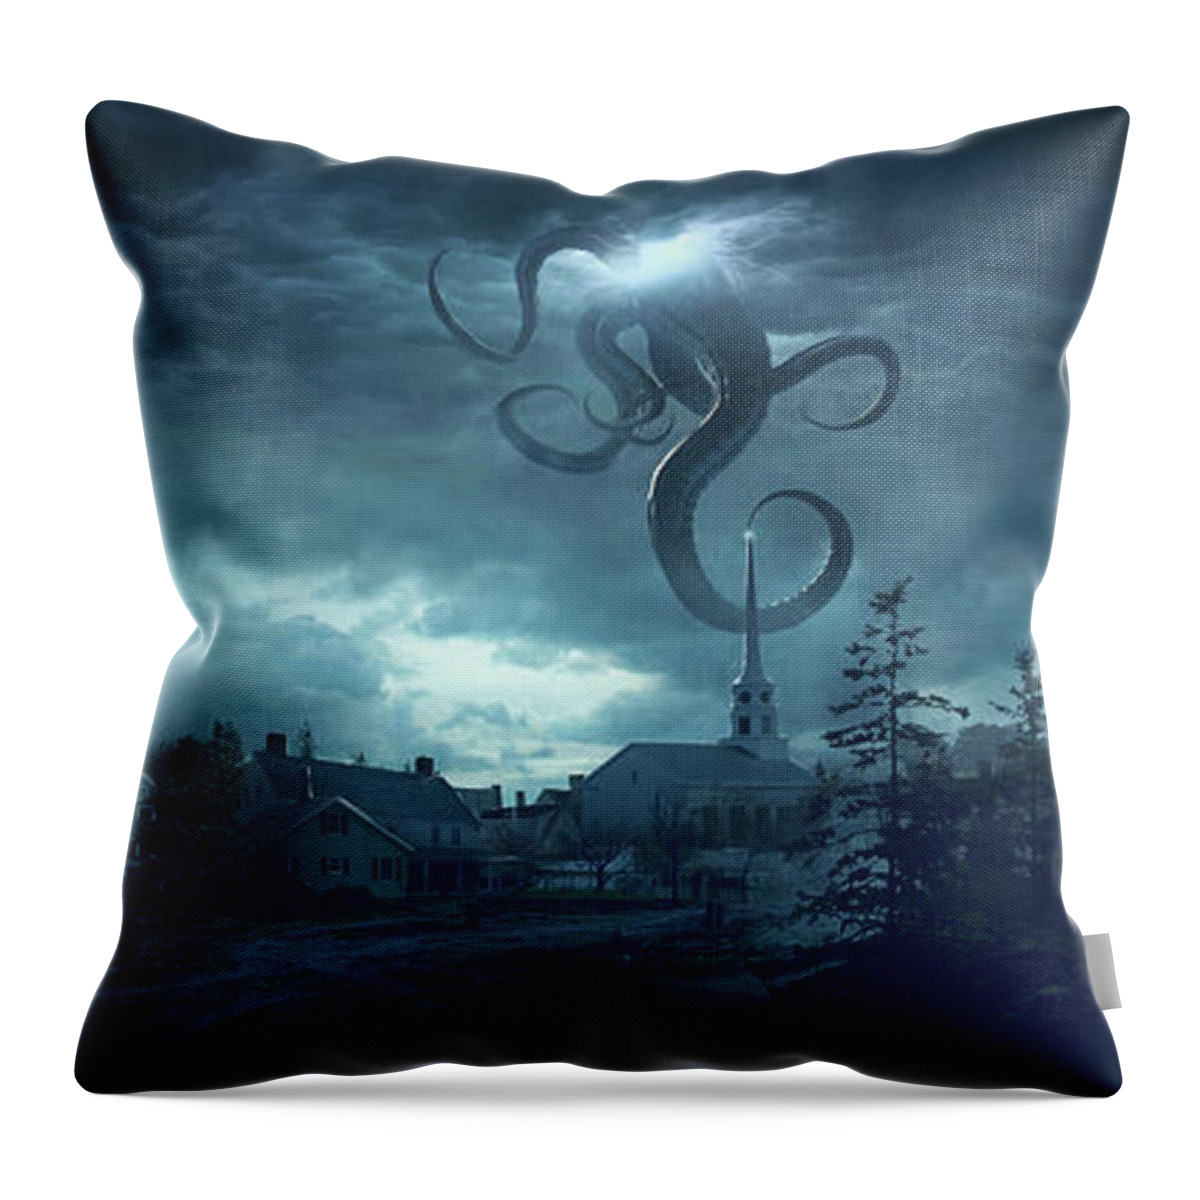 Lovecraft Throw Pillow featuring the digital art New England by Guillem H Pongiluppi